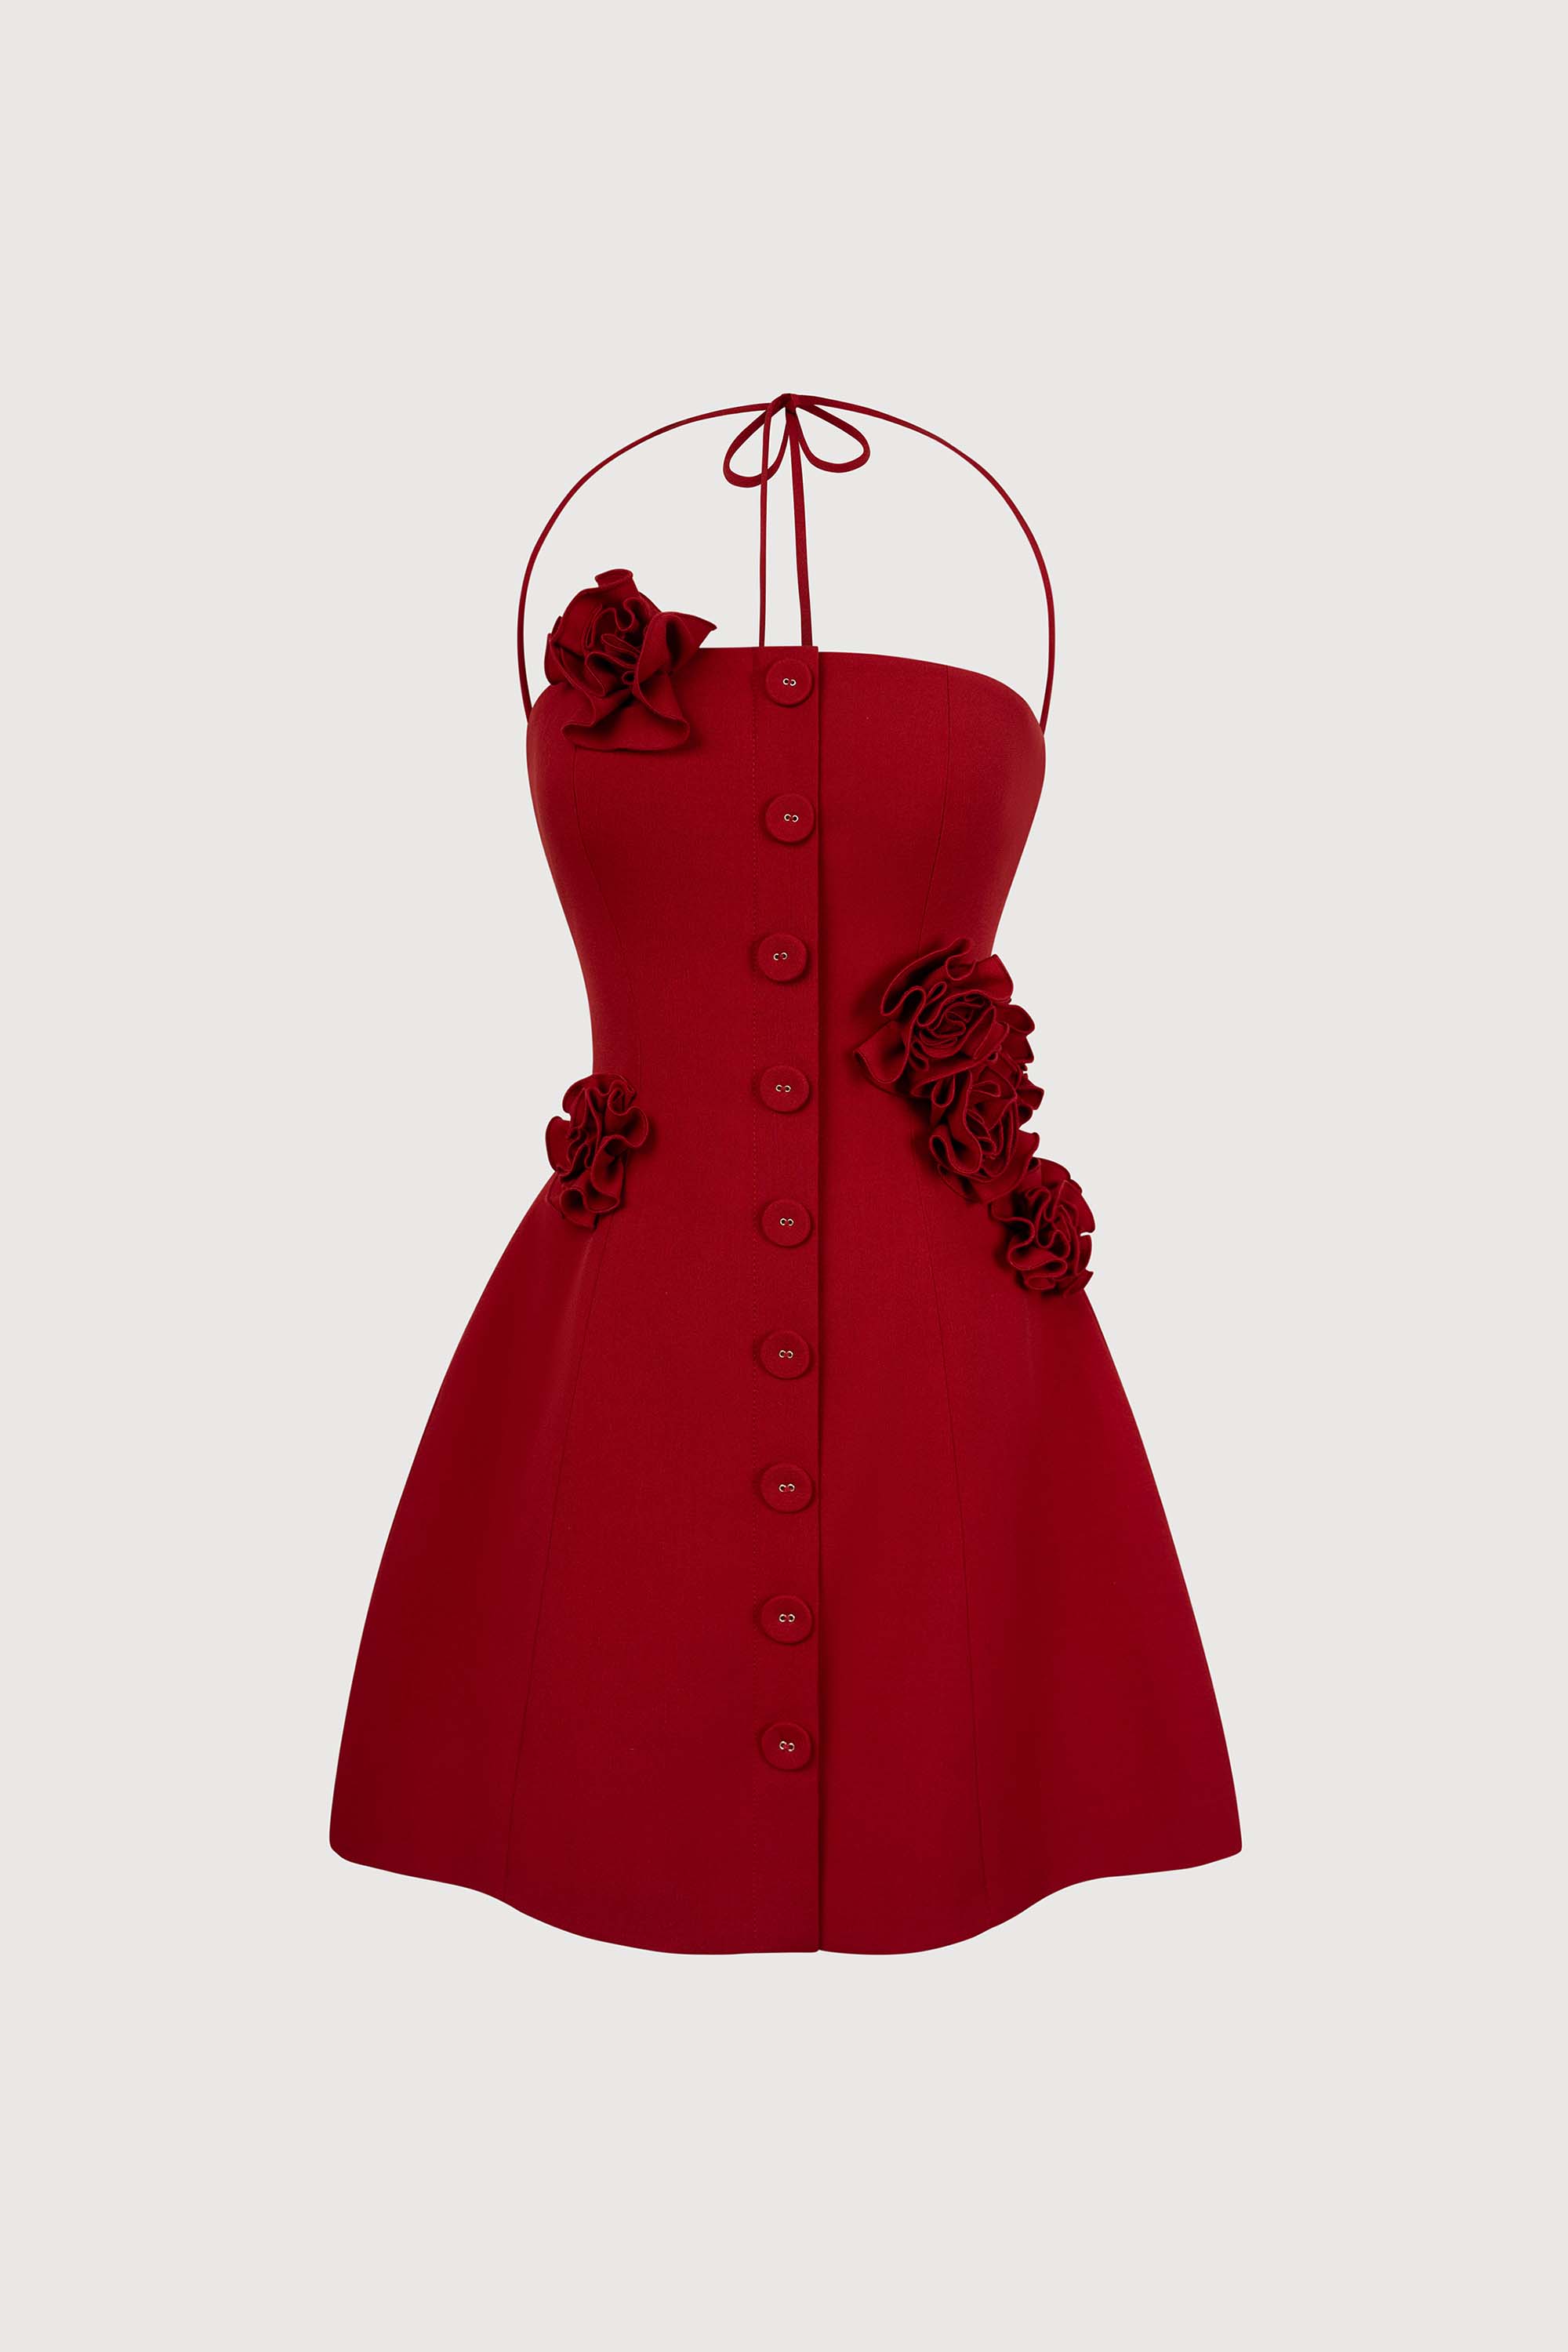 Bobby Red Dress